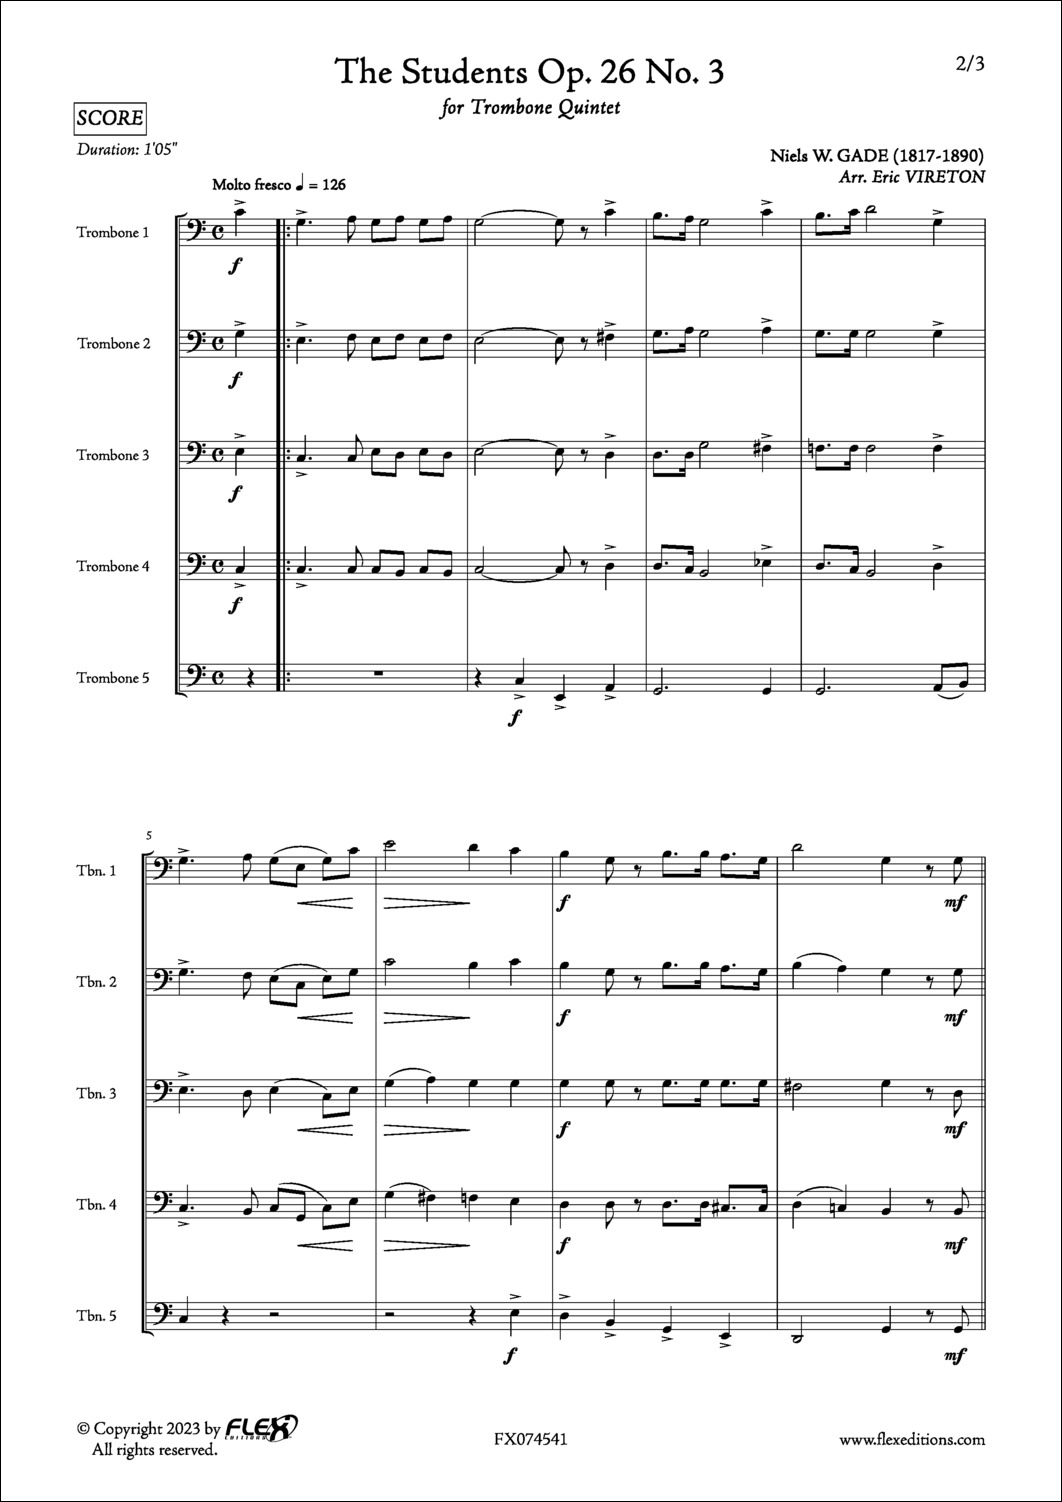 Les Etudiants Op. 26 No. 3 - N. GADE - <font color=#666666>Quintette de Trombones</font>